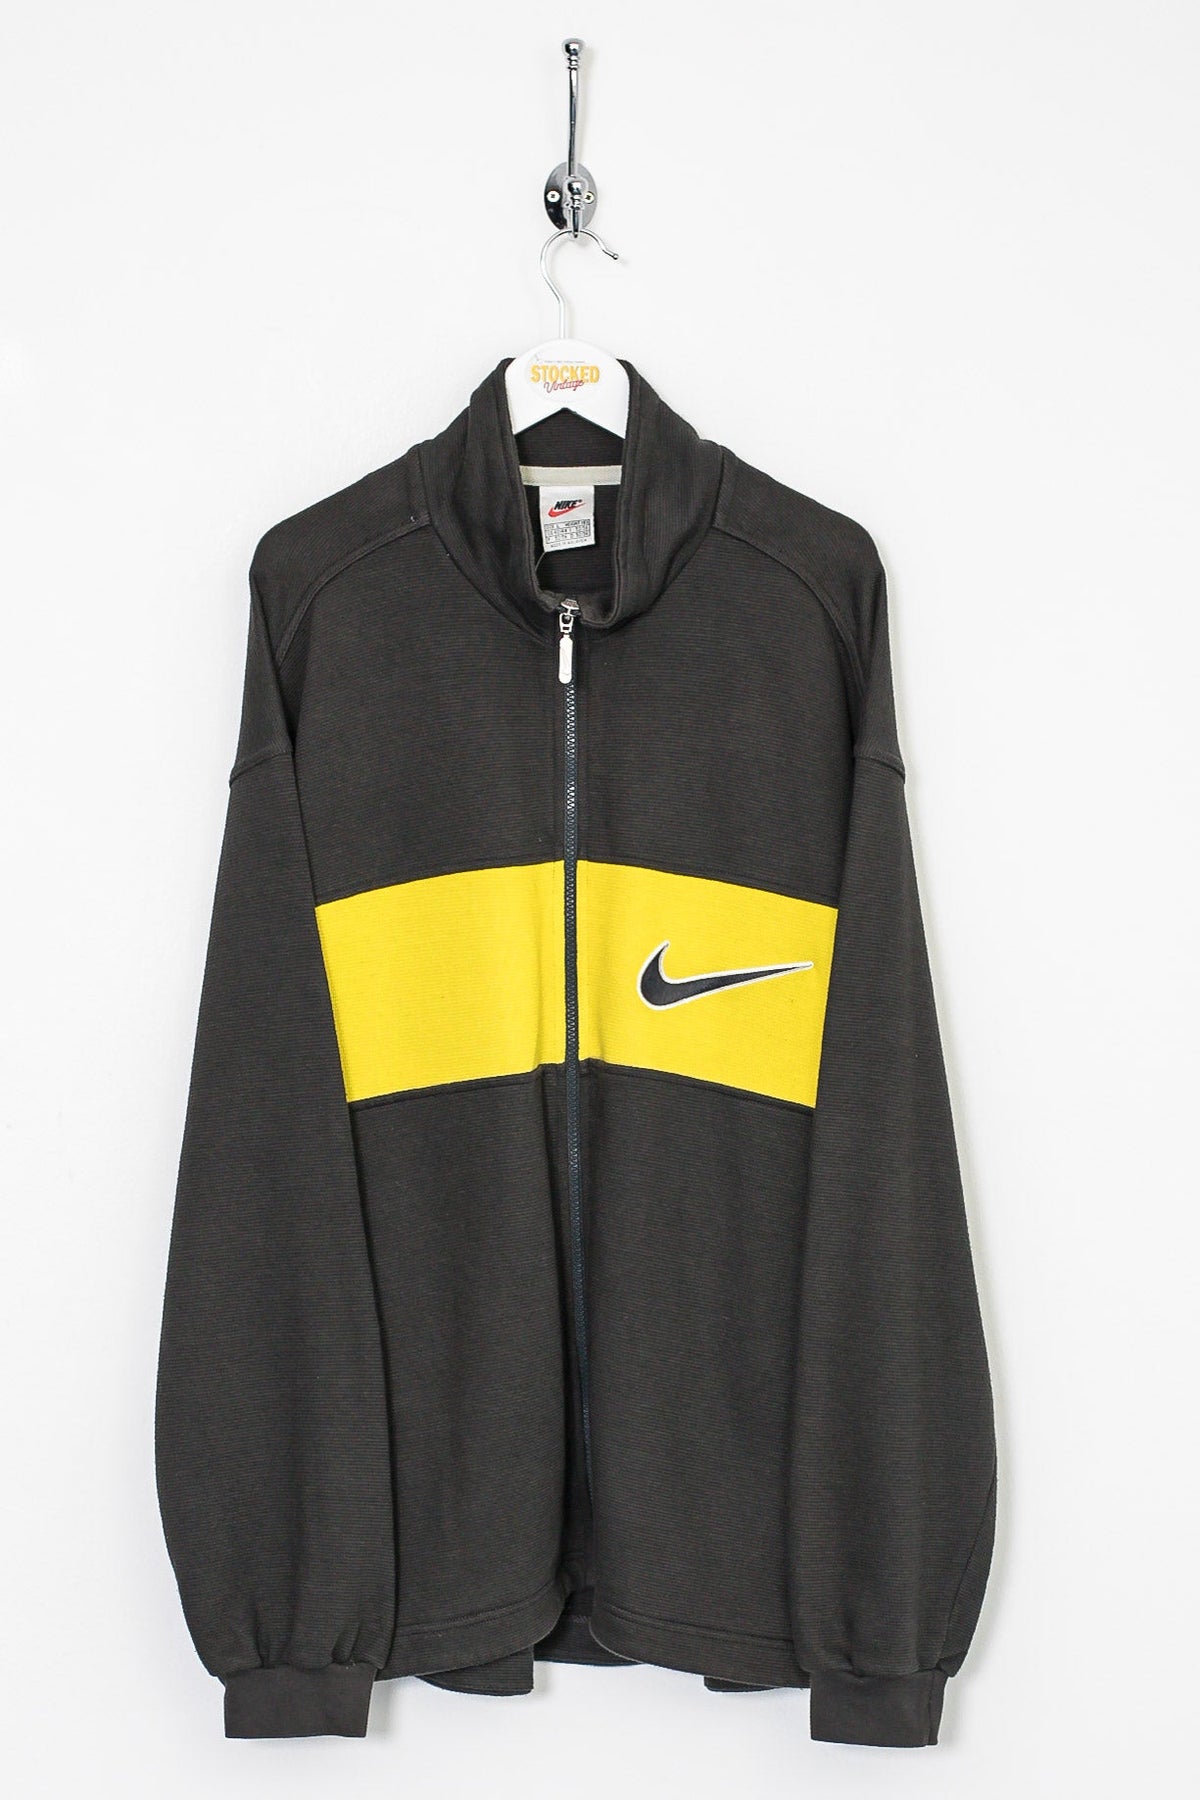 90s Nike Full Zipped Sweatshirt (L)